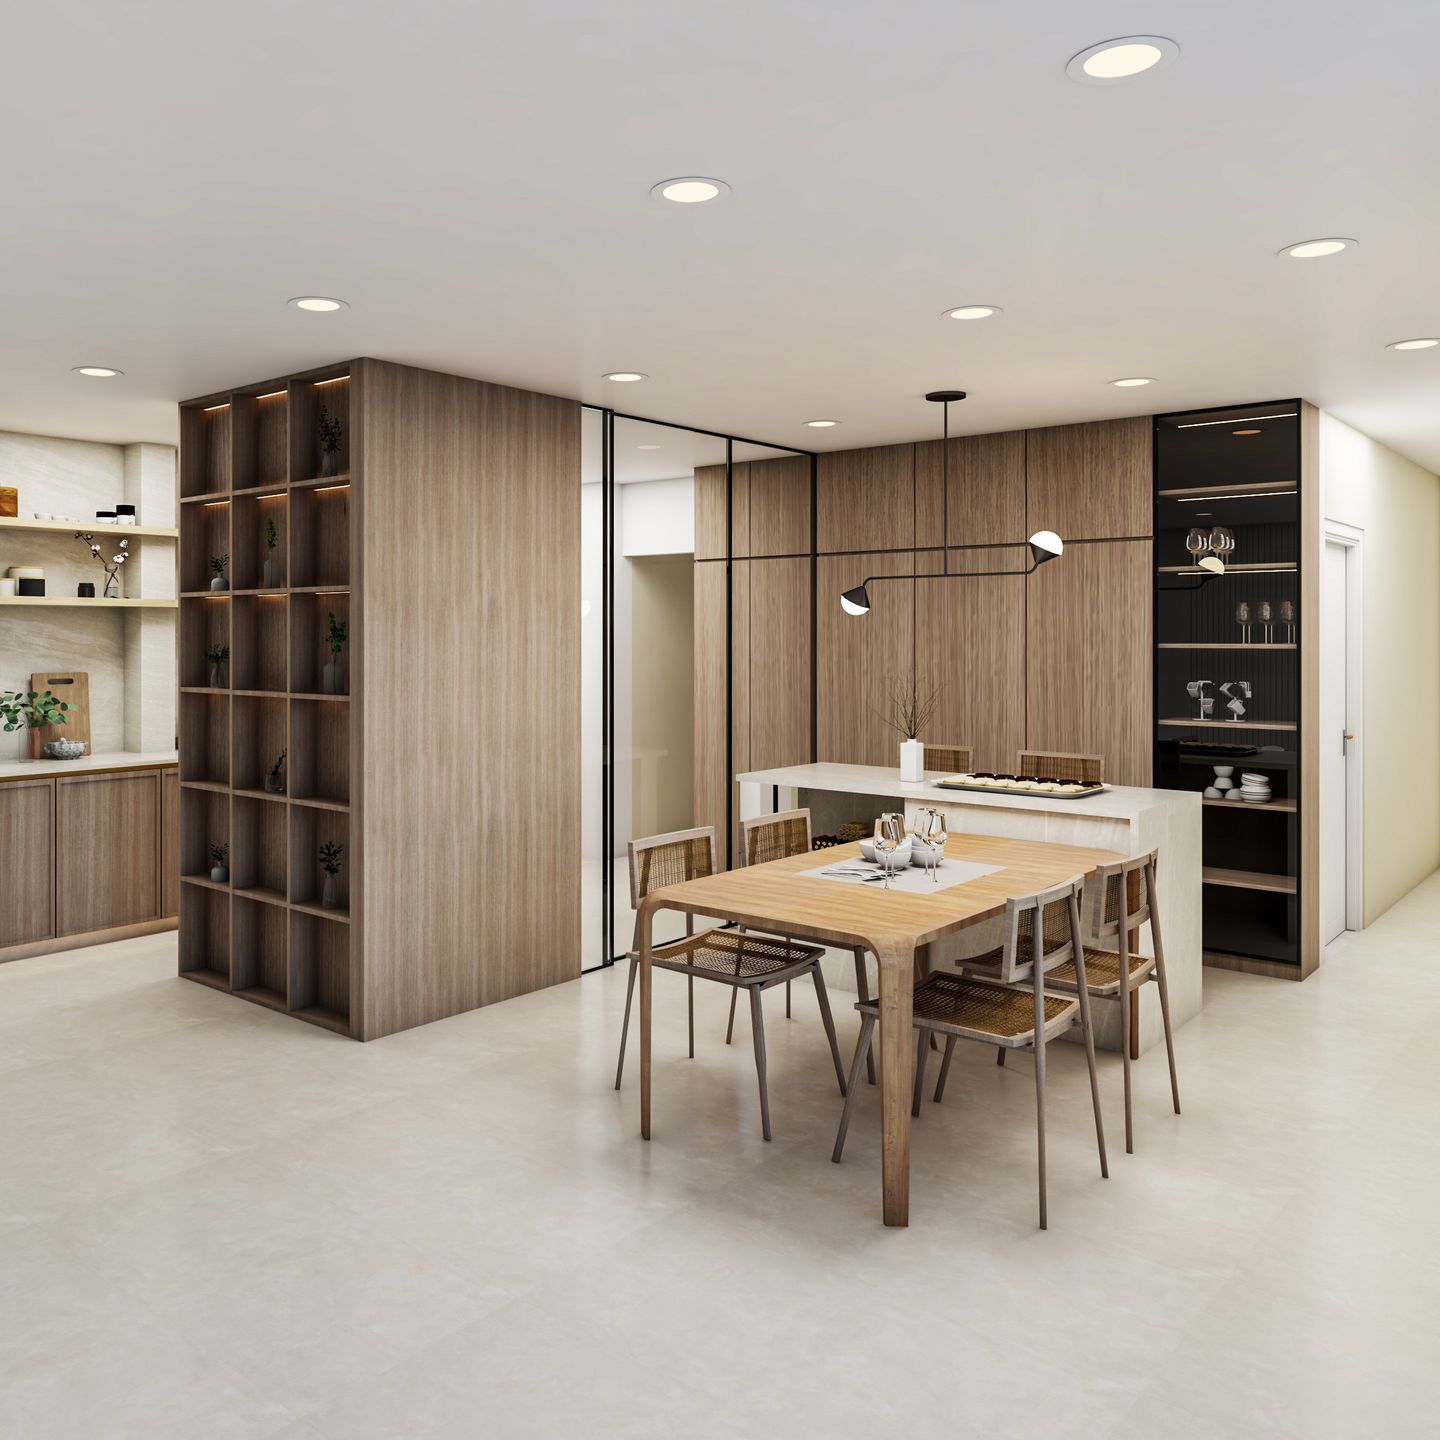 Spacious open Kitchen Design - Livspace